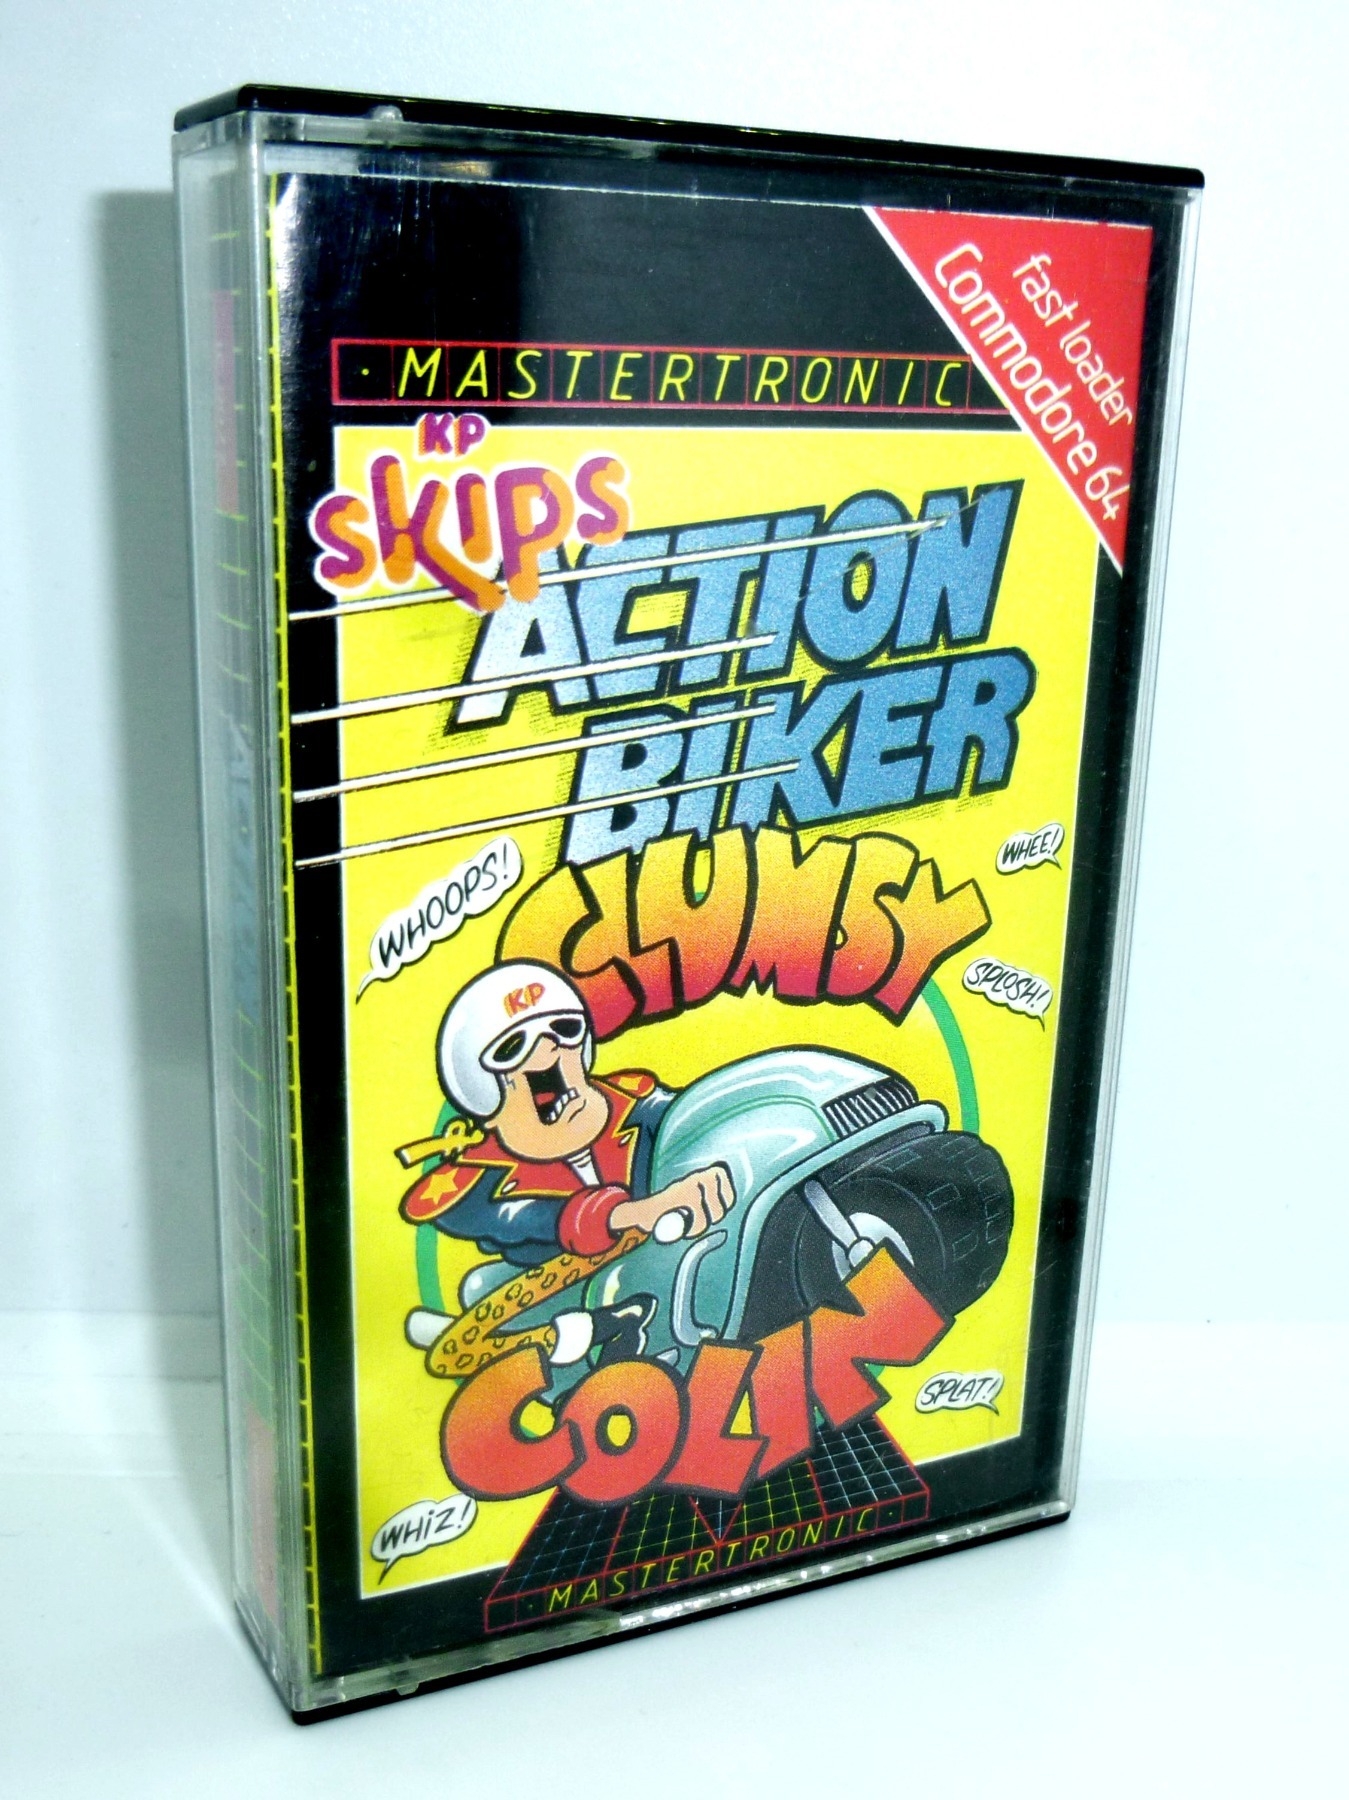 KP Skips Action Biker Clumsy Colin - Kassette / Datasette